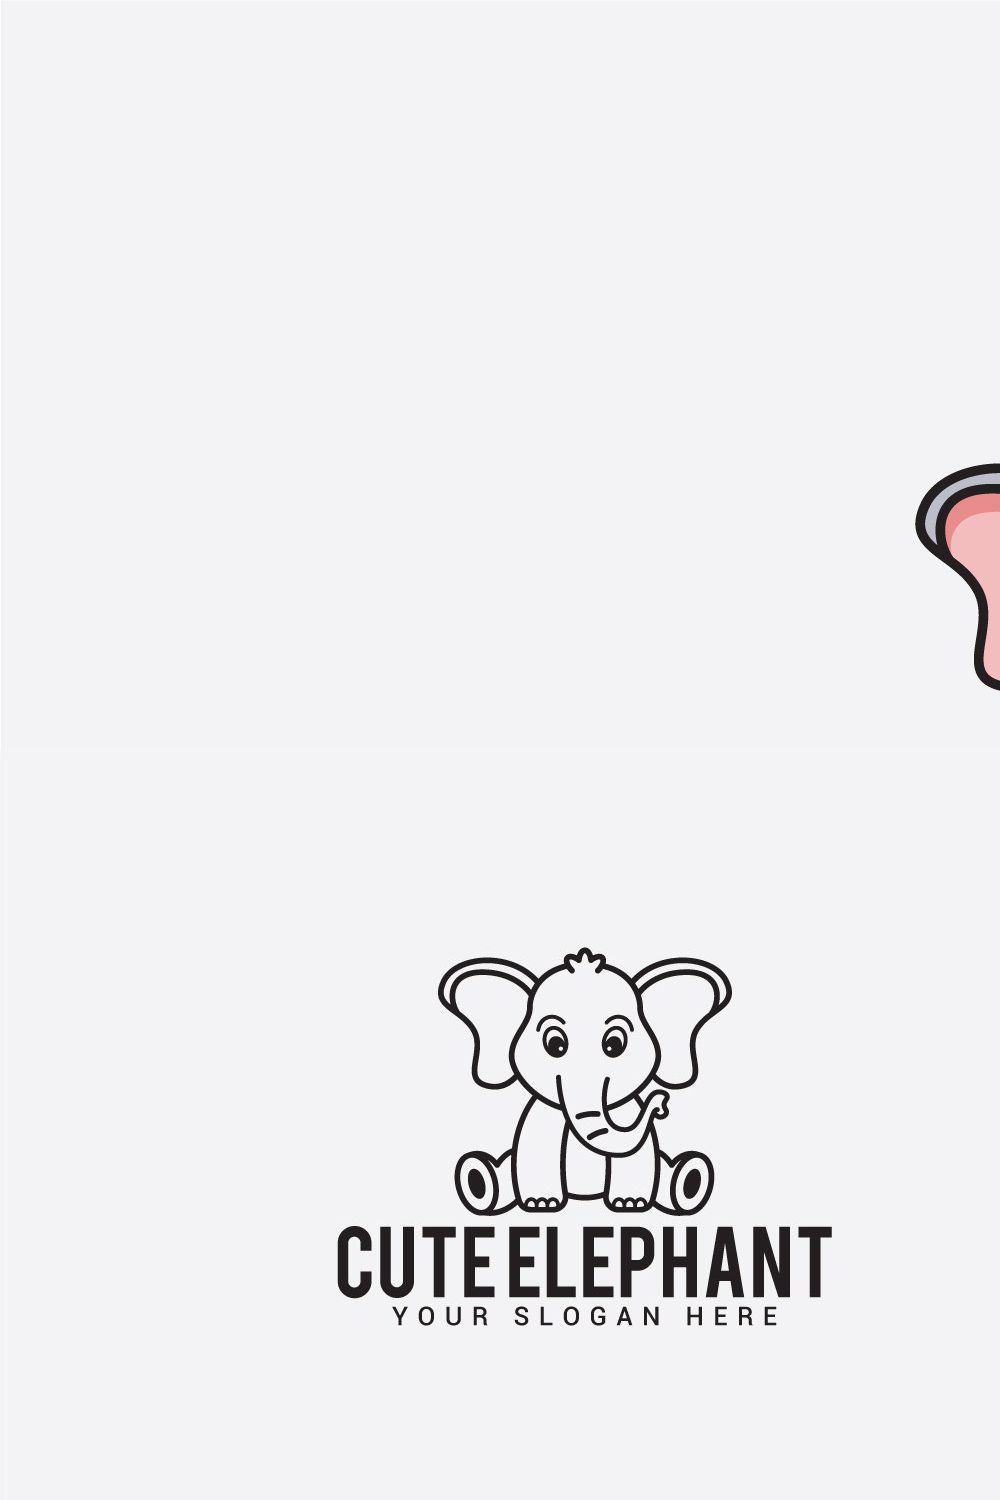 cute elephant logo pinterest preview image.